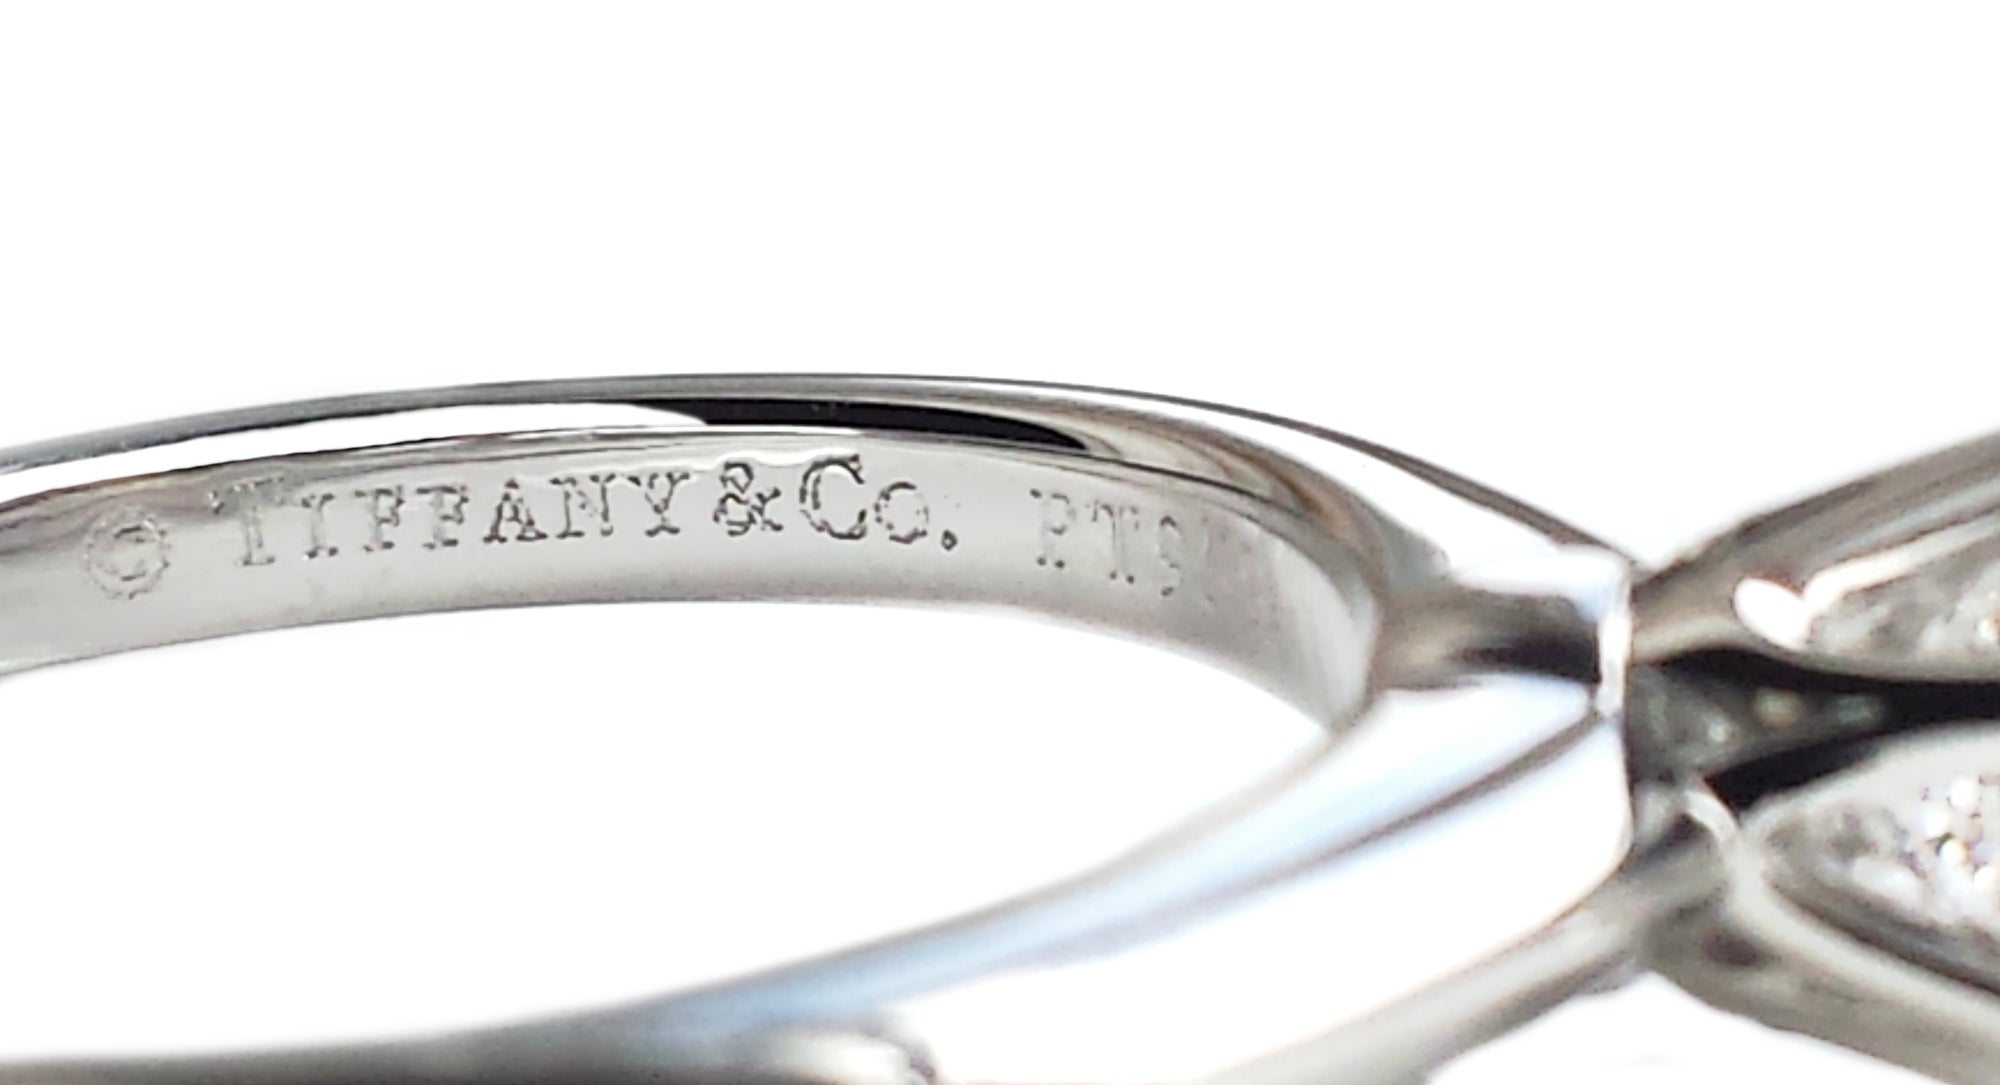 Tiffany & Co. 0.37ct D/VS1 Triple XXX Round Brilliant Engagement Ring